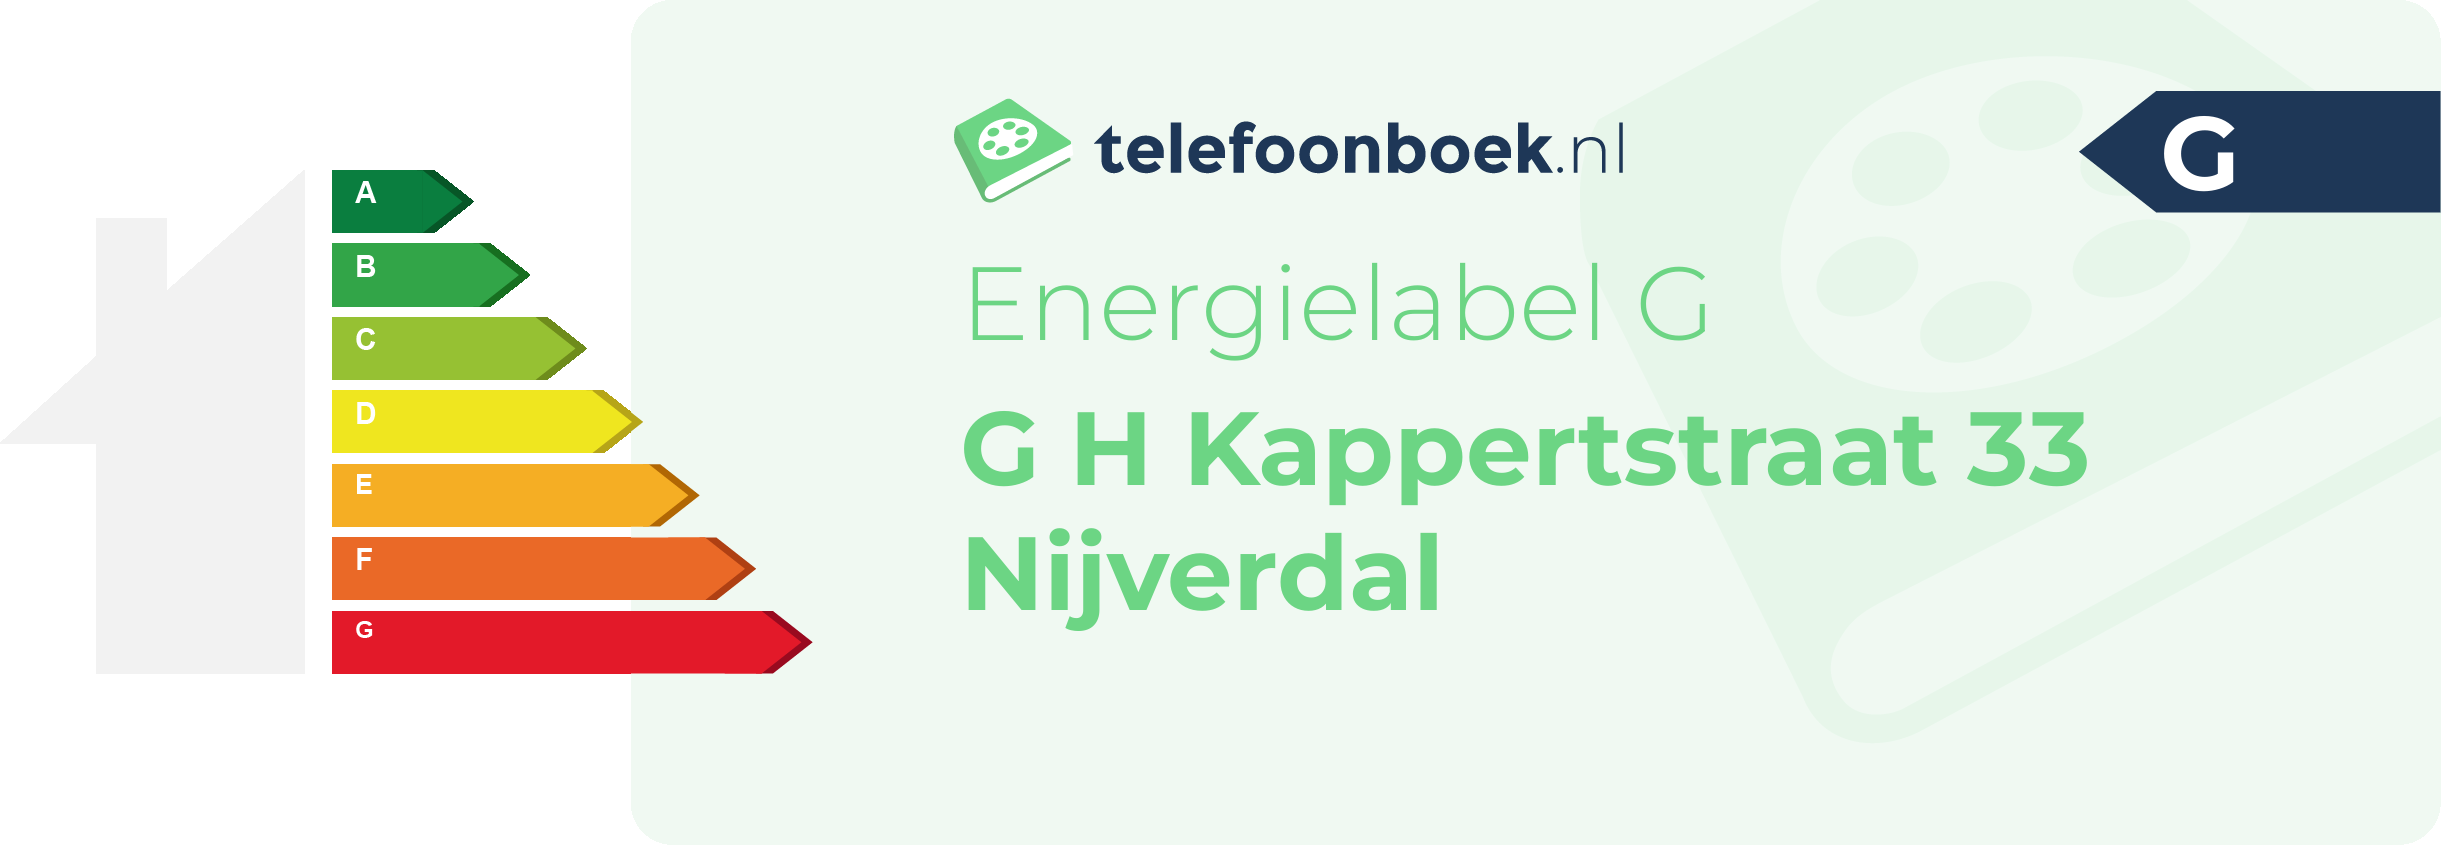 Energielabel G H Kappertstraat 33 Nijverdal